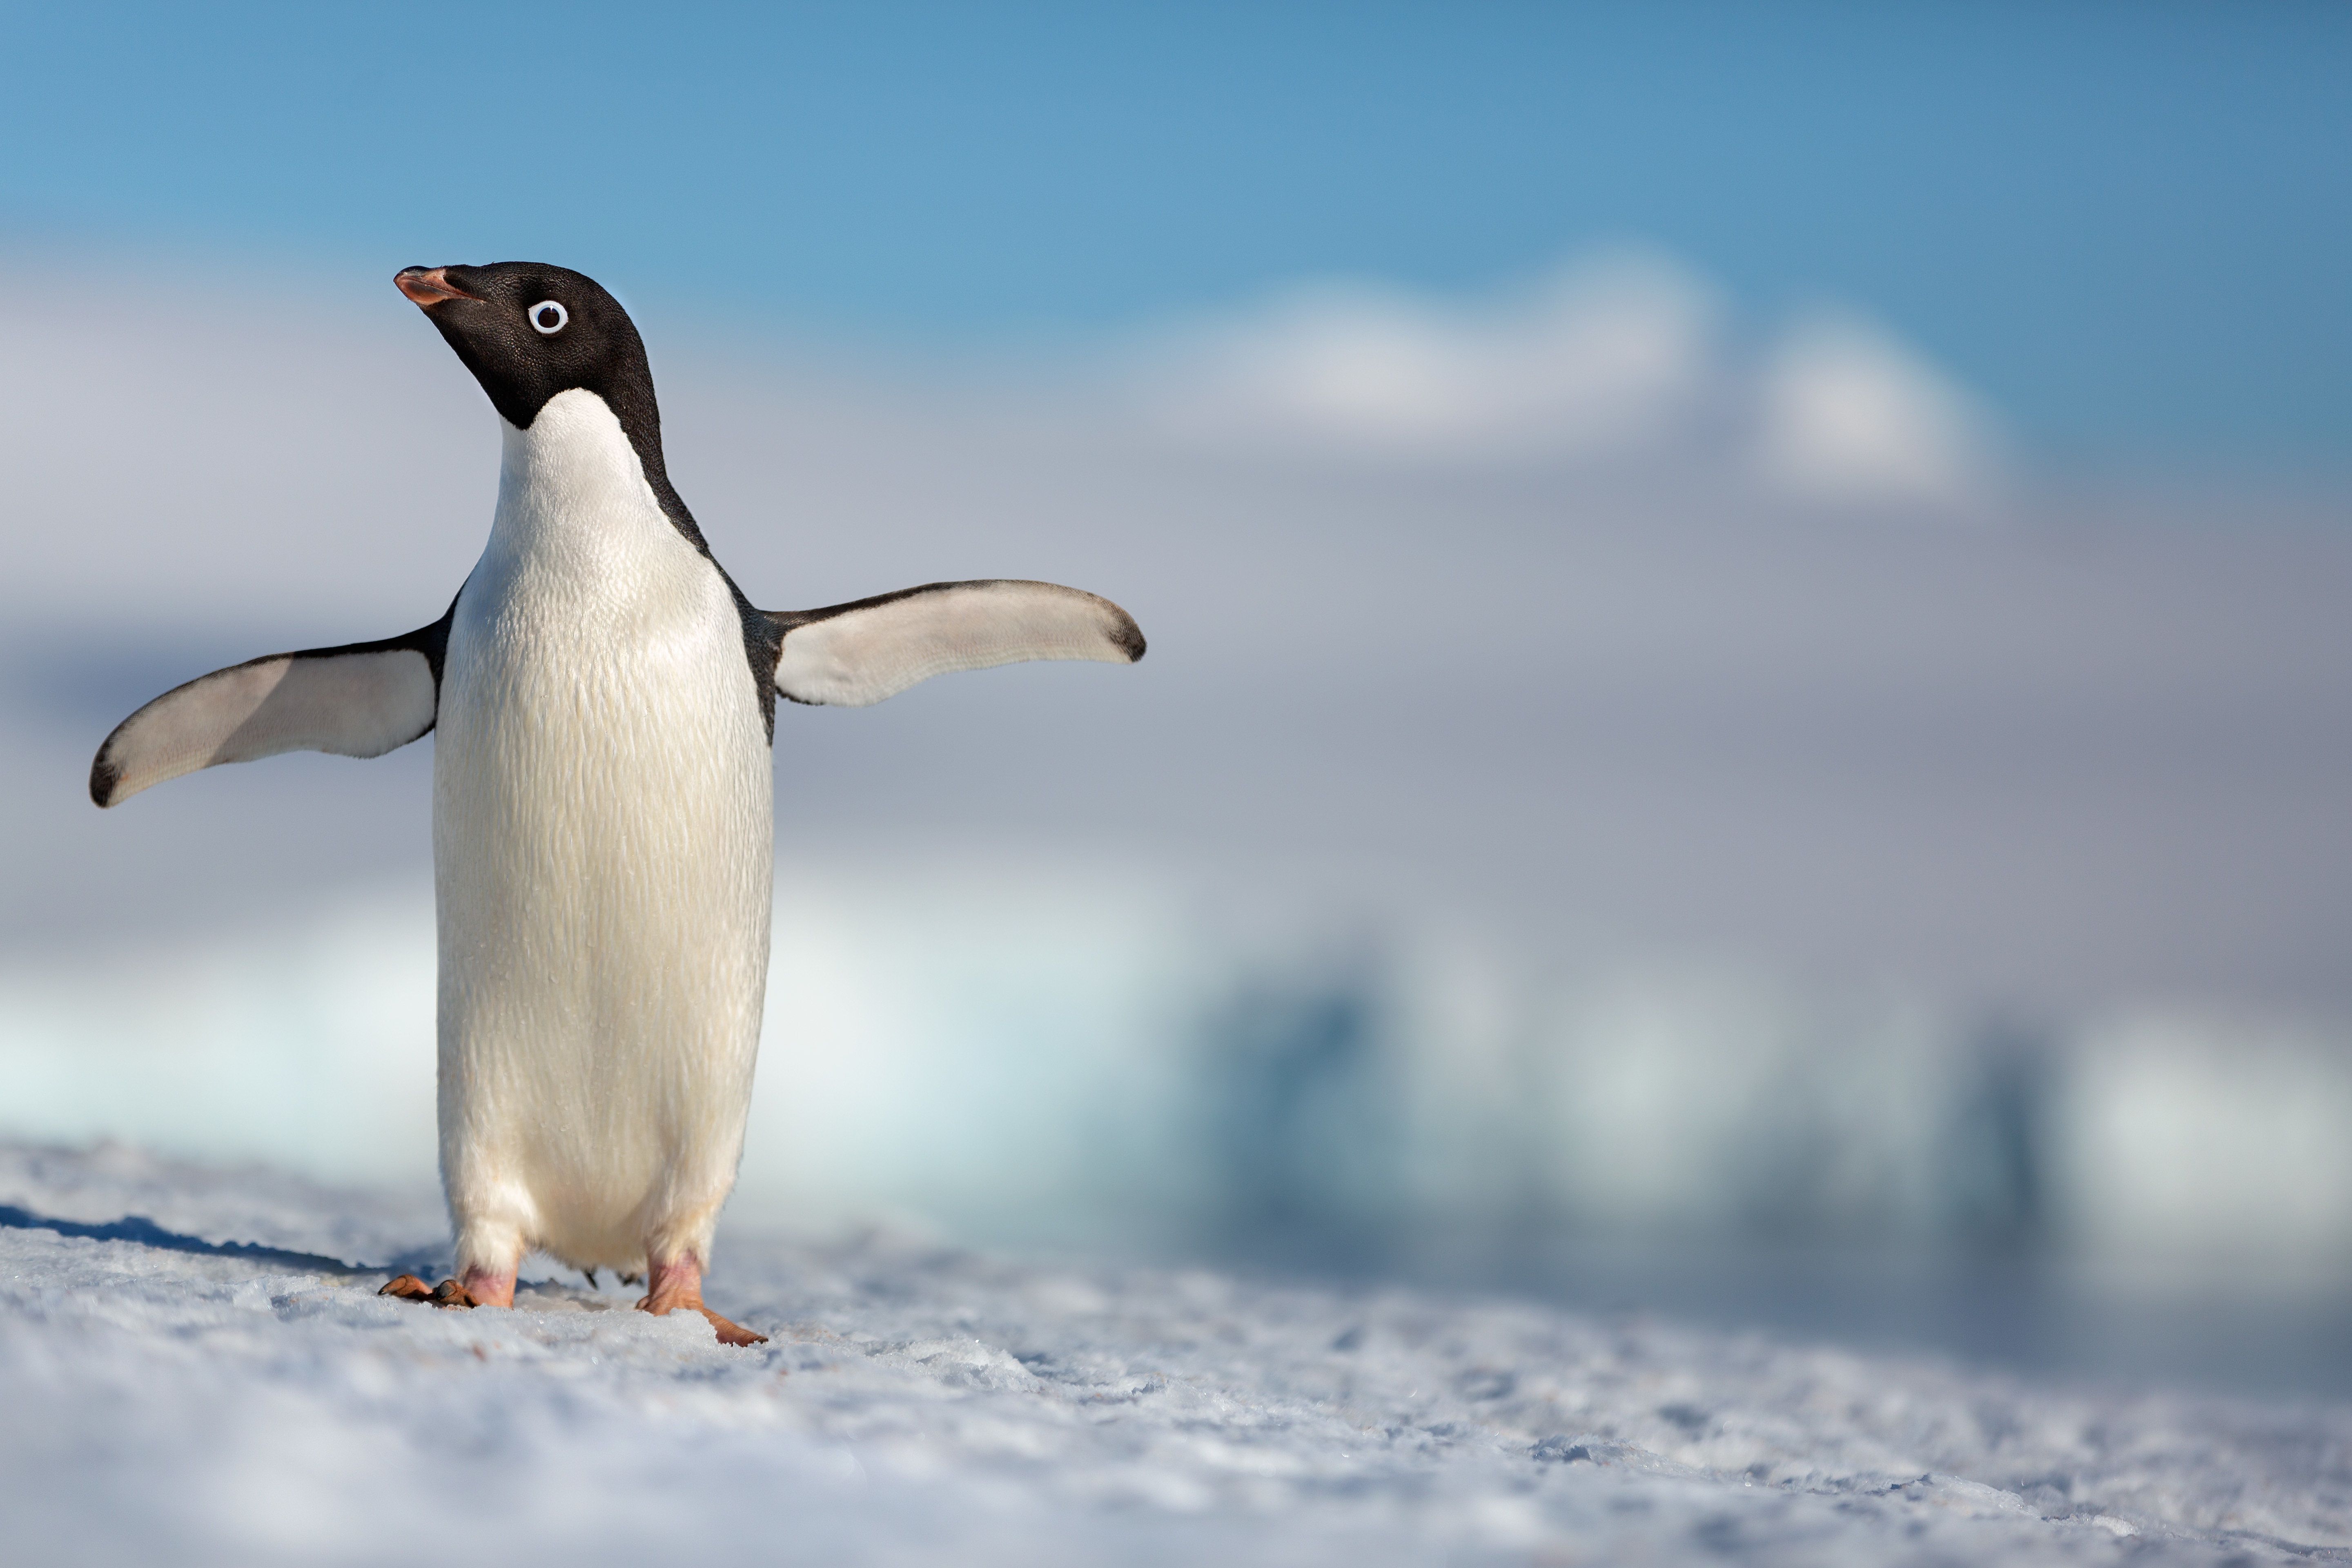 El Capitan Theater Presents a Showing of All-New Disneynature Film “Penguins”.